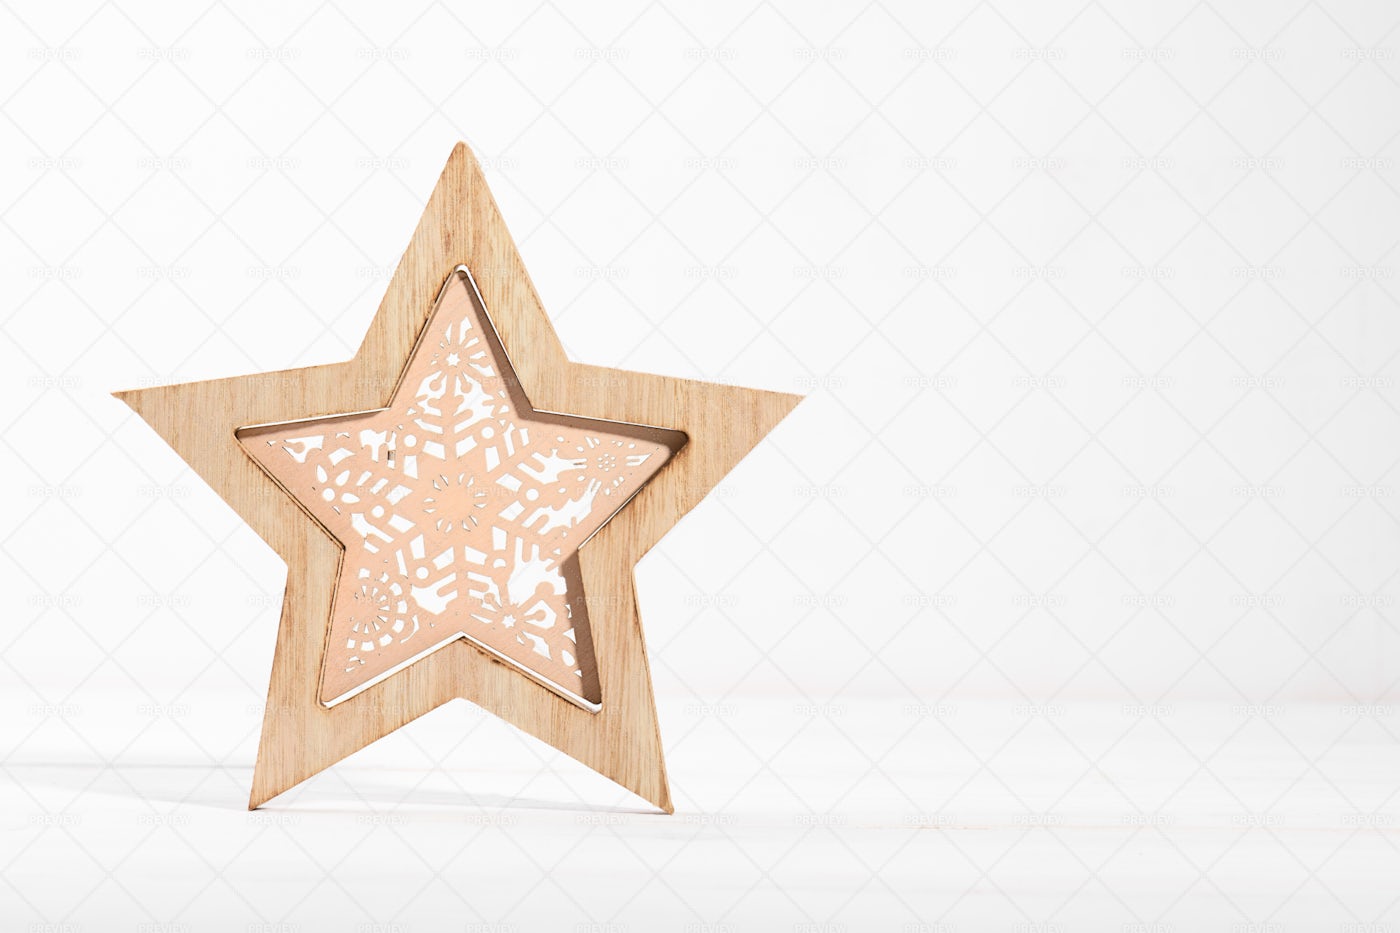 Wooden Christmas Star Decoration: Stock Photos